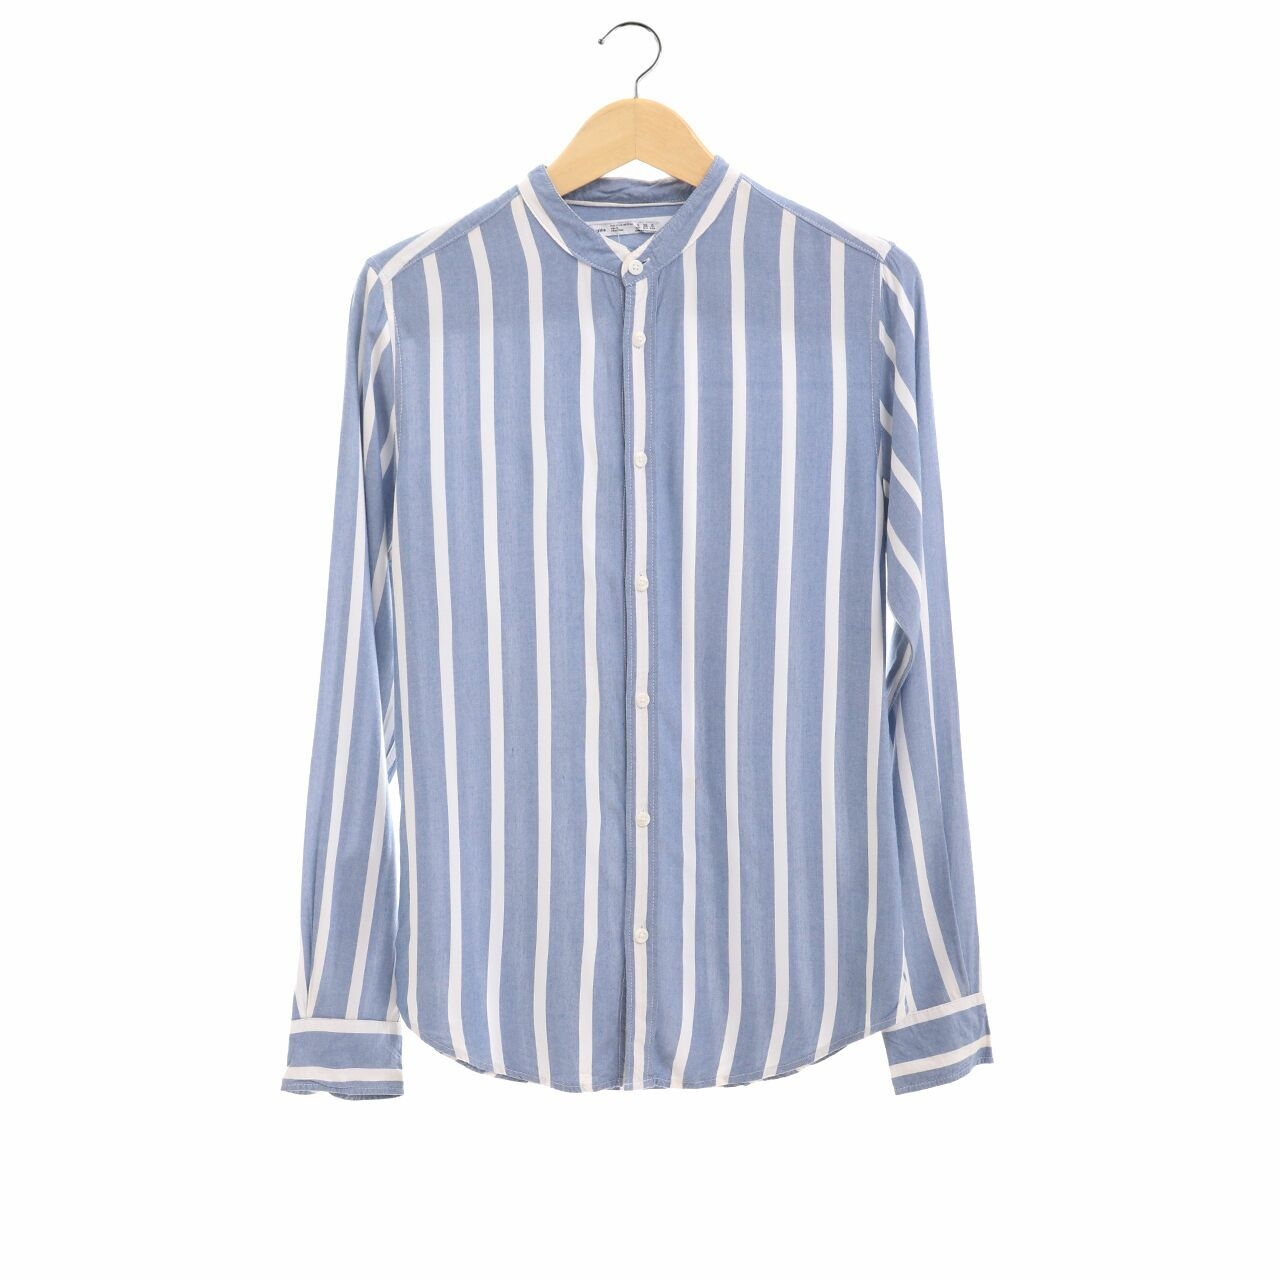 Bershka Blue & White Stripes Shirt